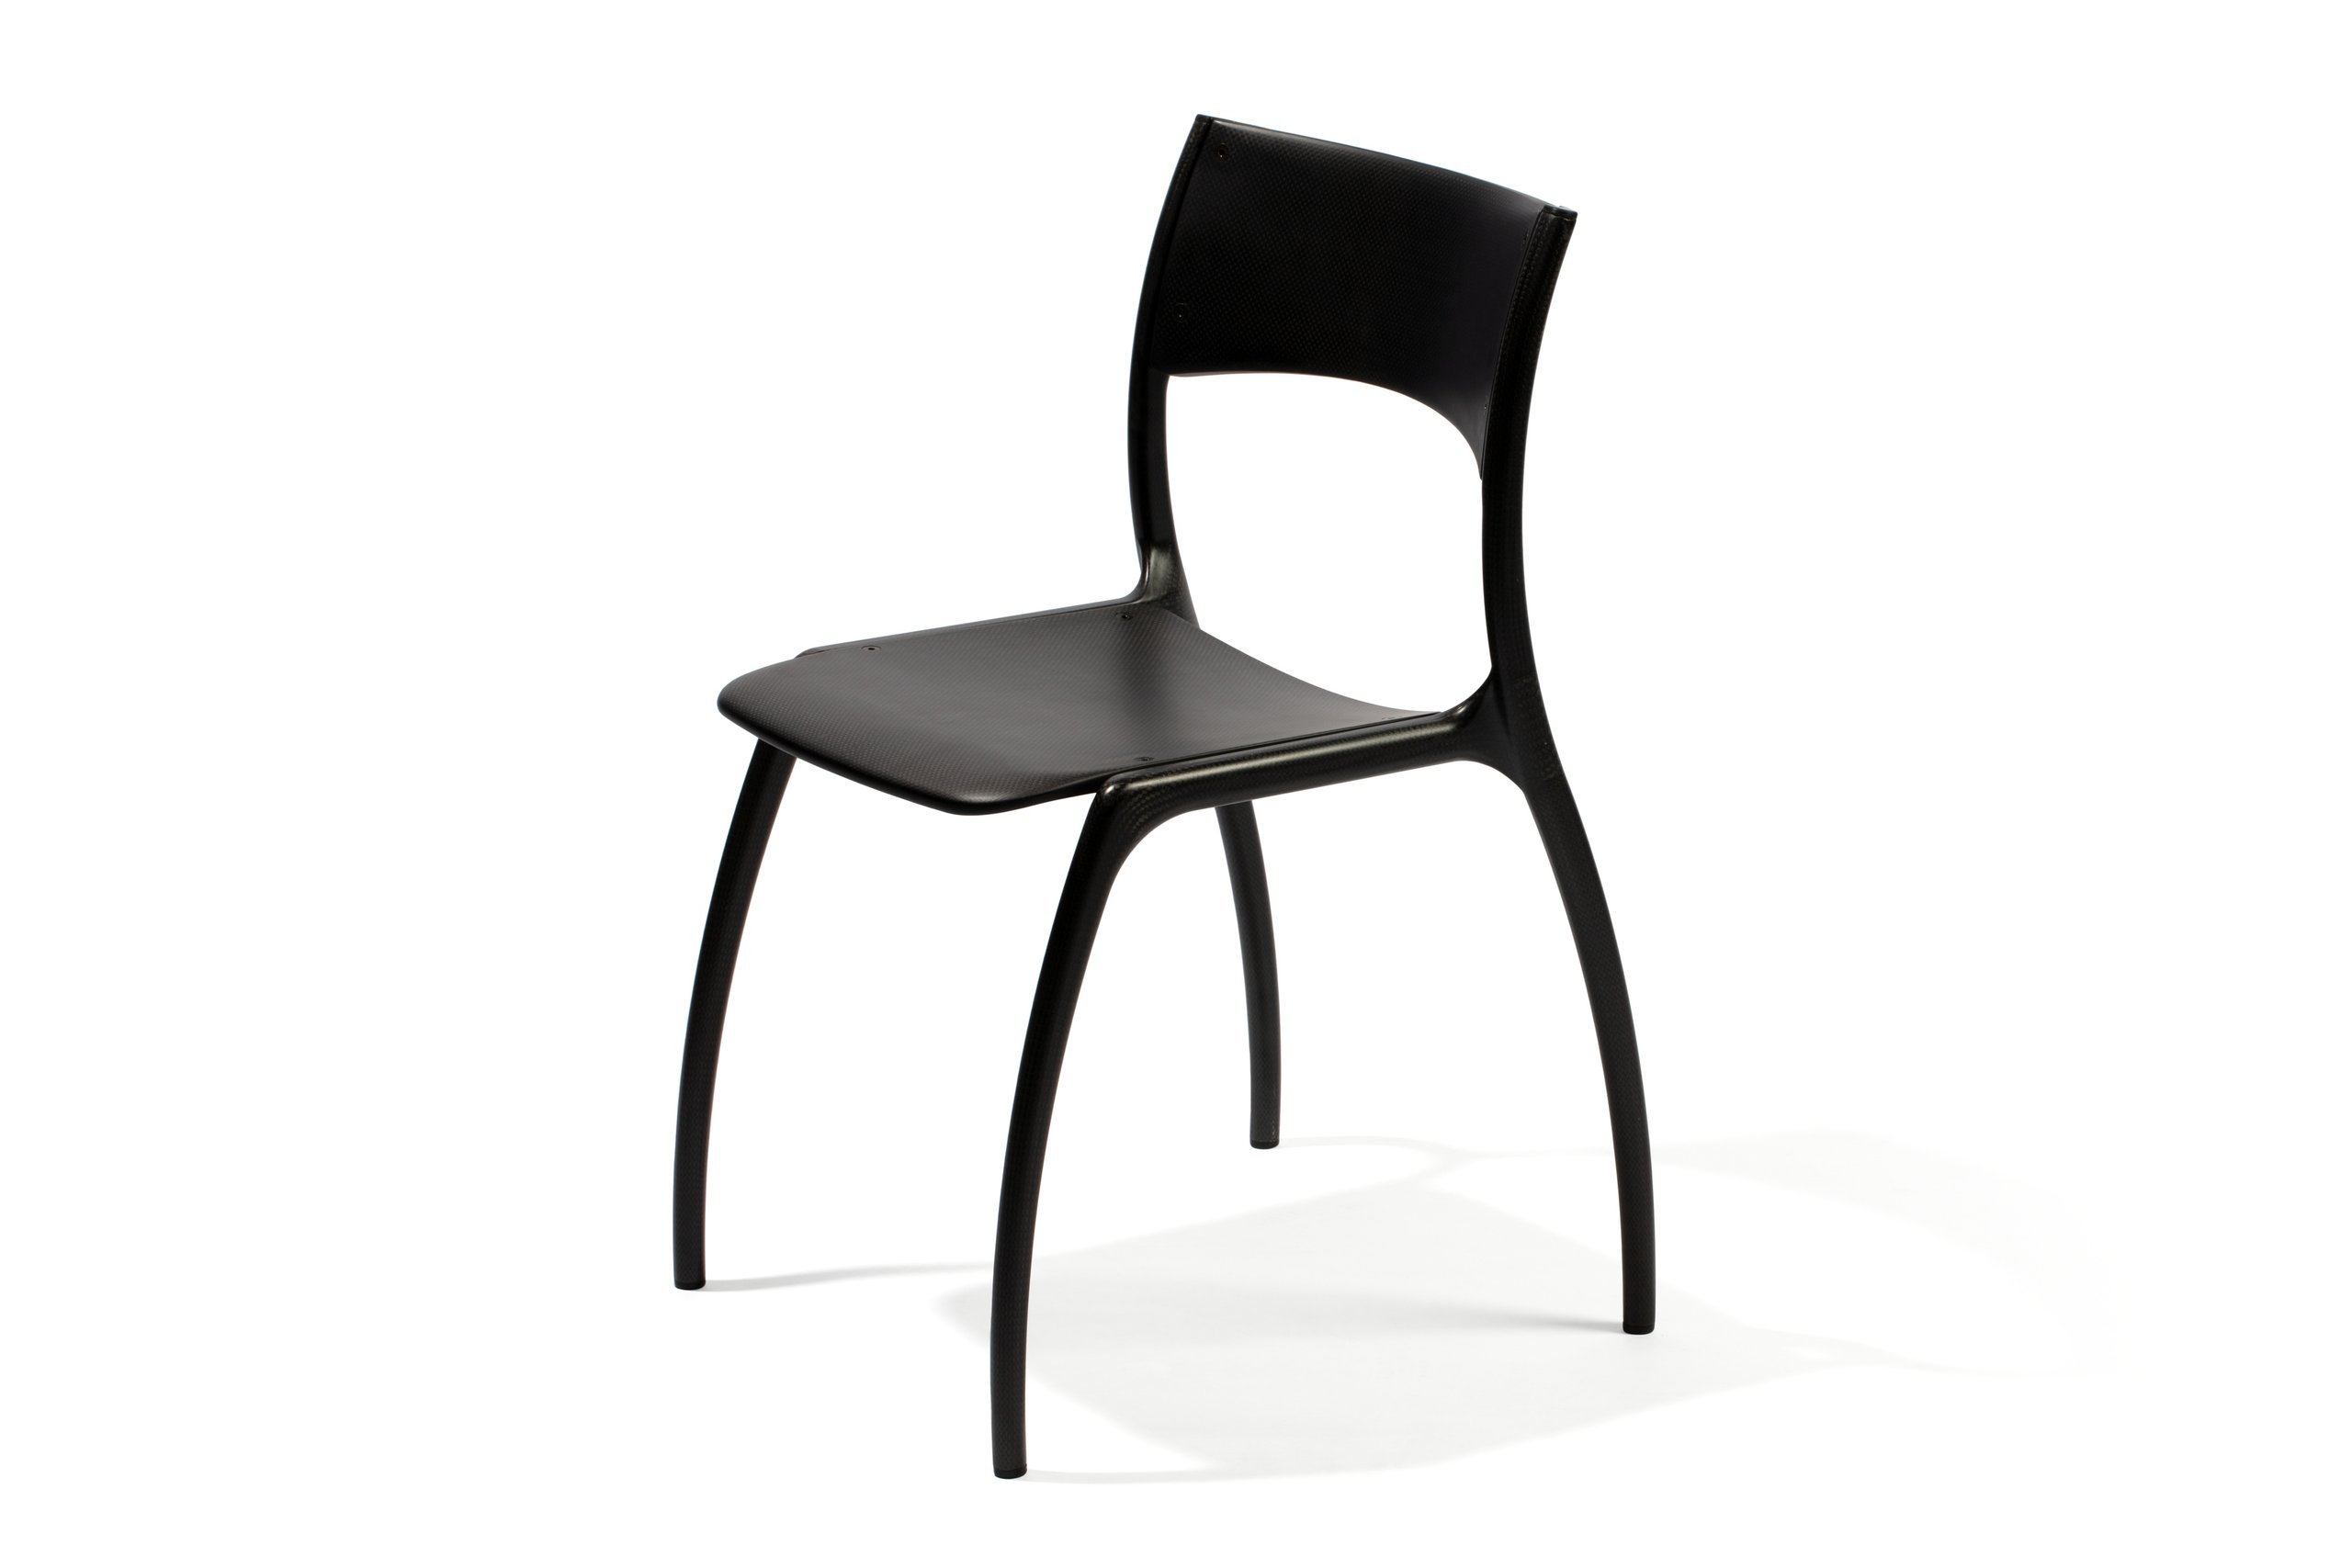 'Talon chair' by Bang Design and Talon Technology